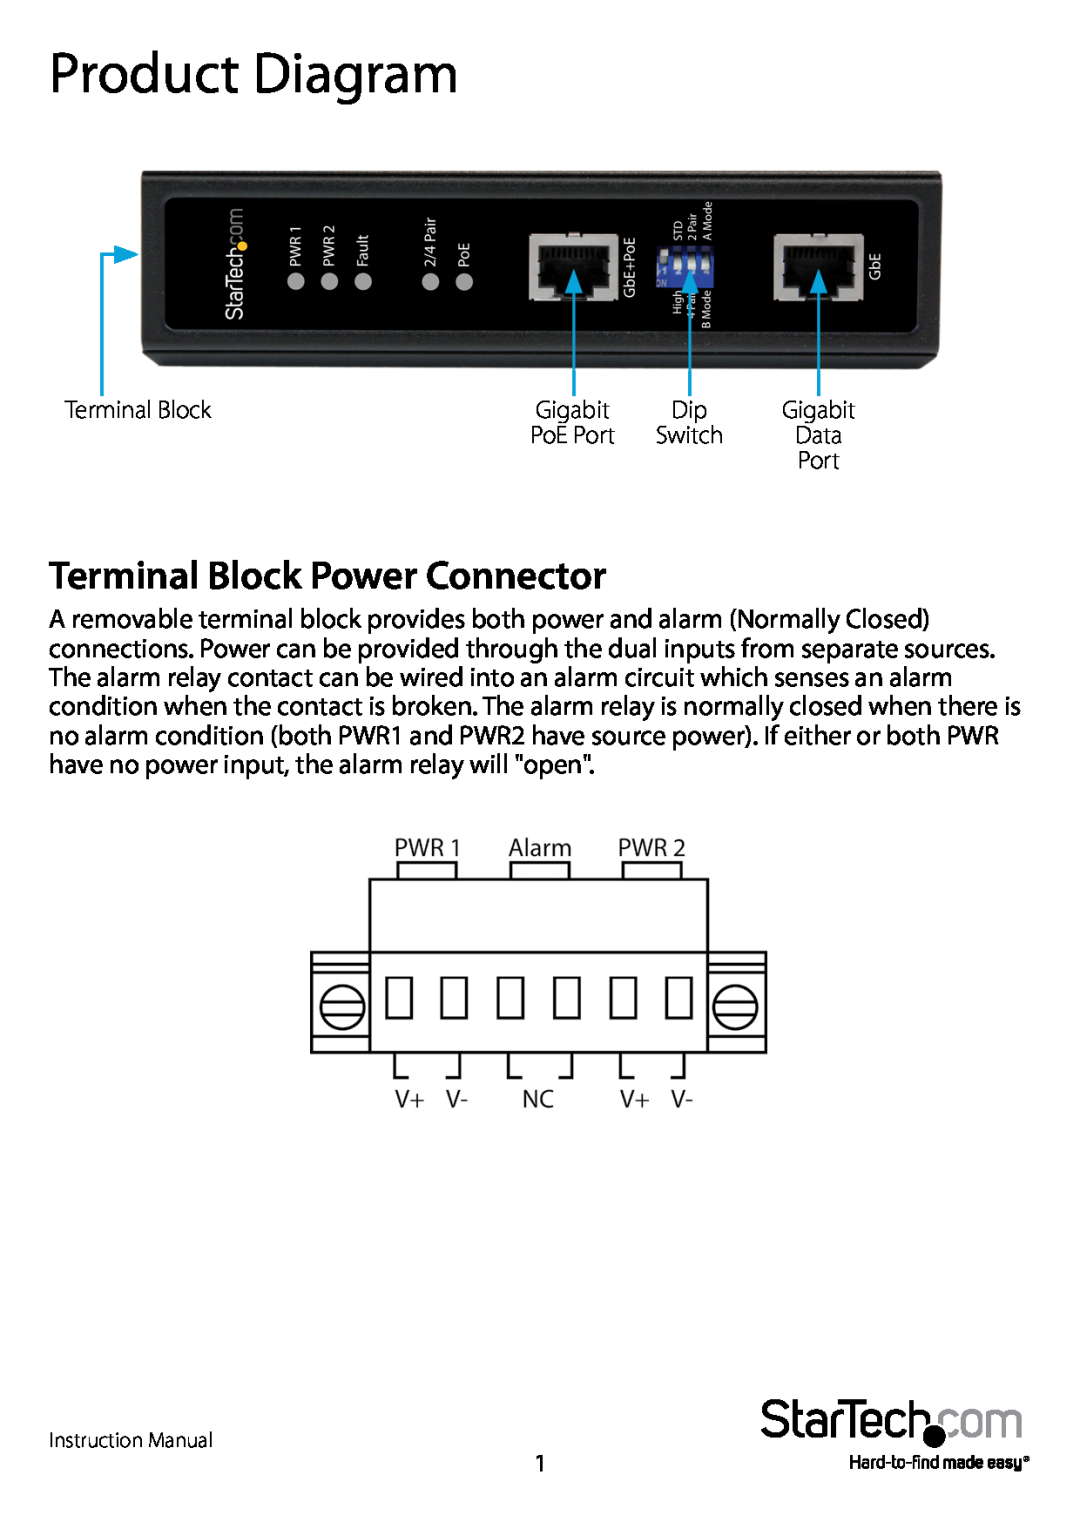 StarTech.com POEINJ1GI manual Product Diagram, Terminal Block Power Connector 